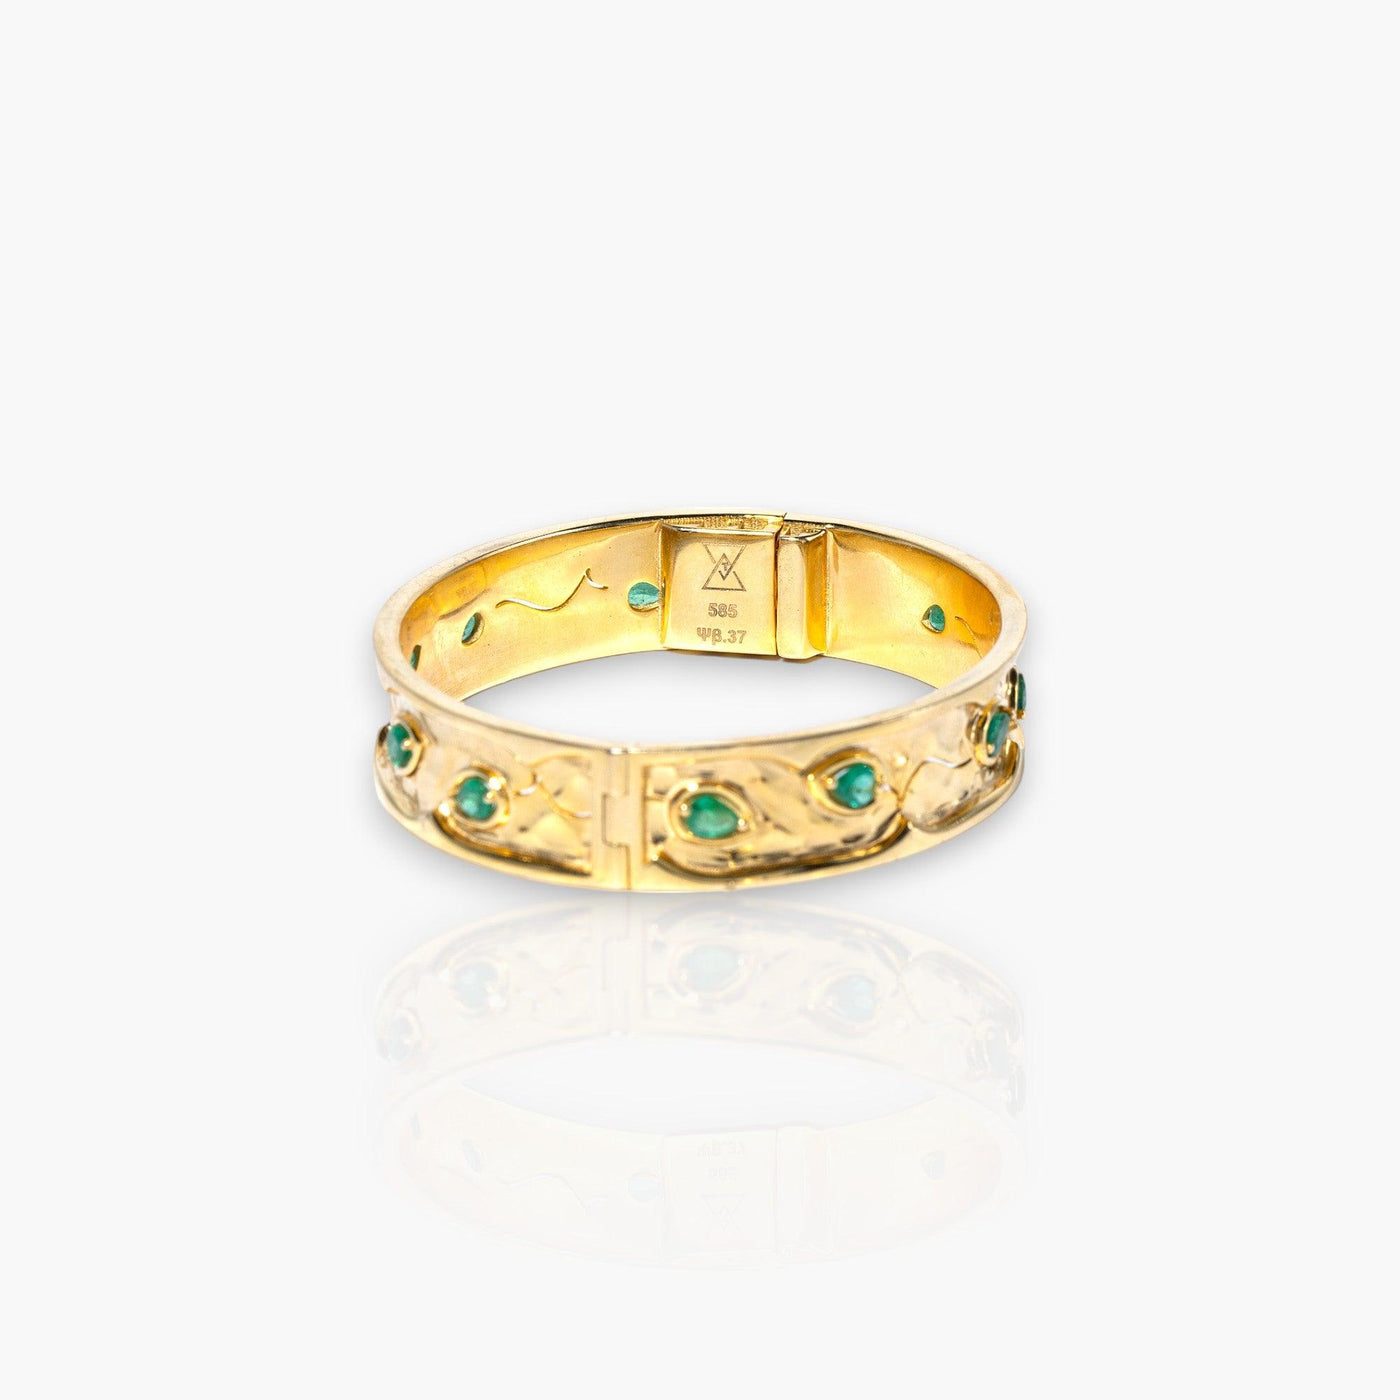 Ophelia Bangle Bracelet - Moregola Fine Jewelry